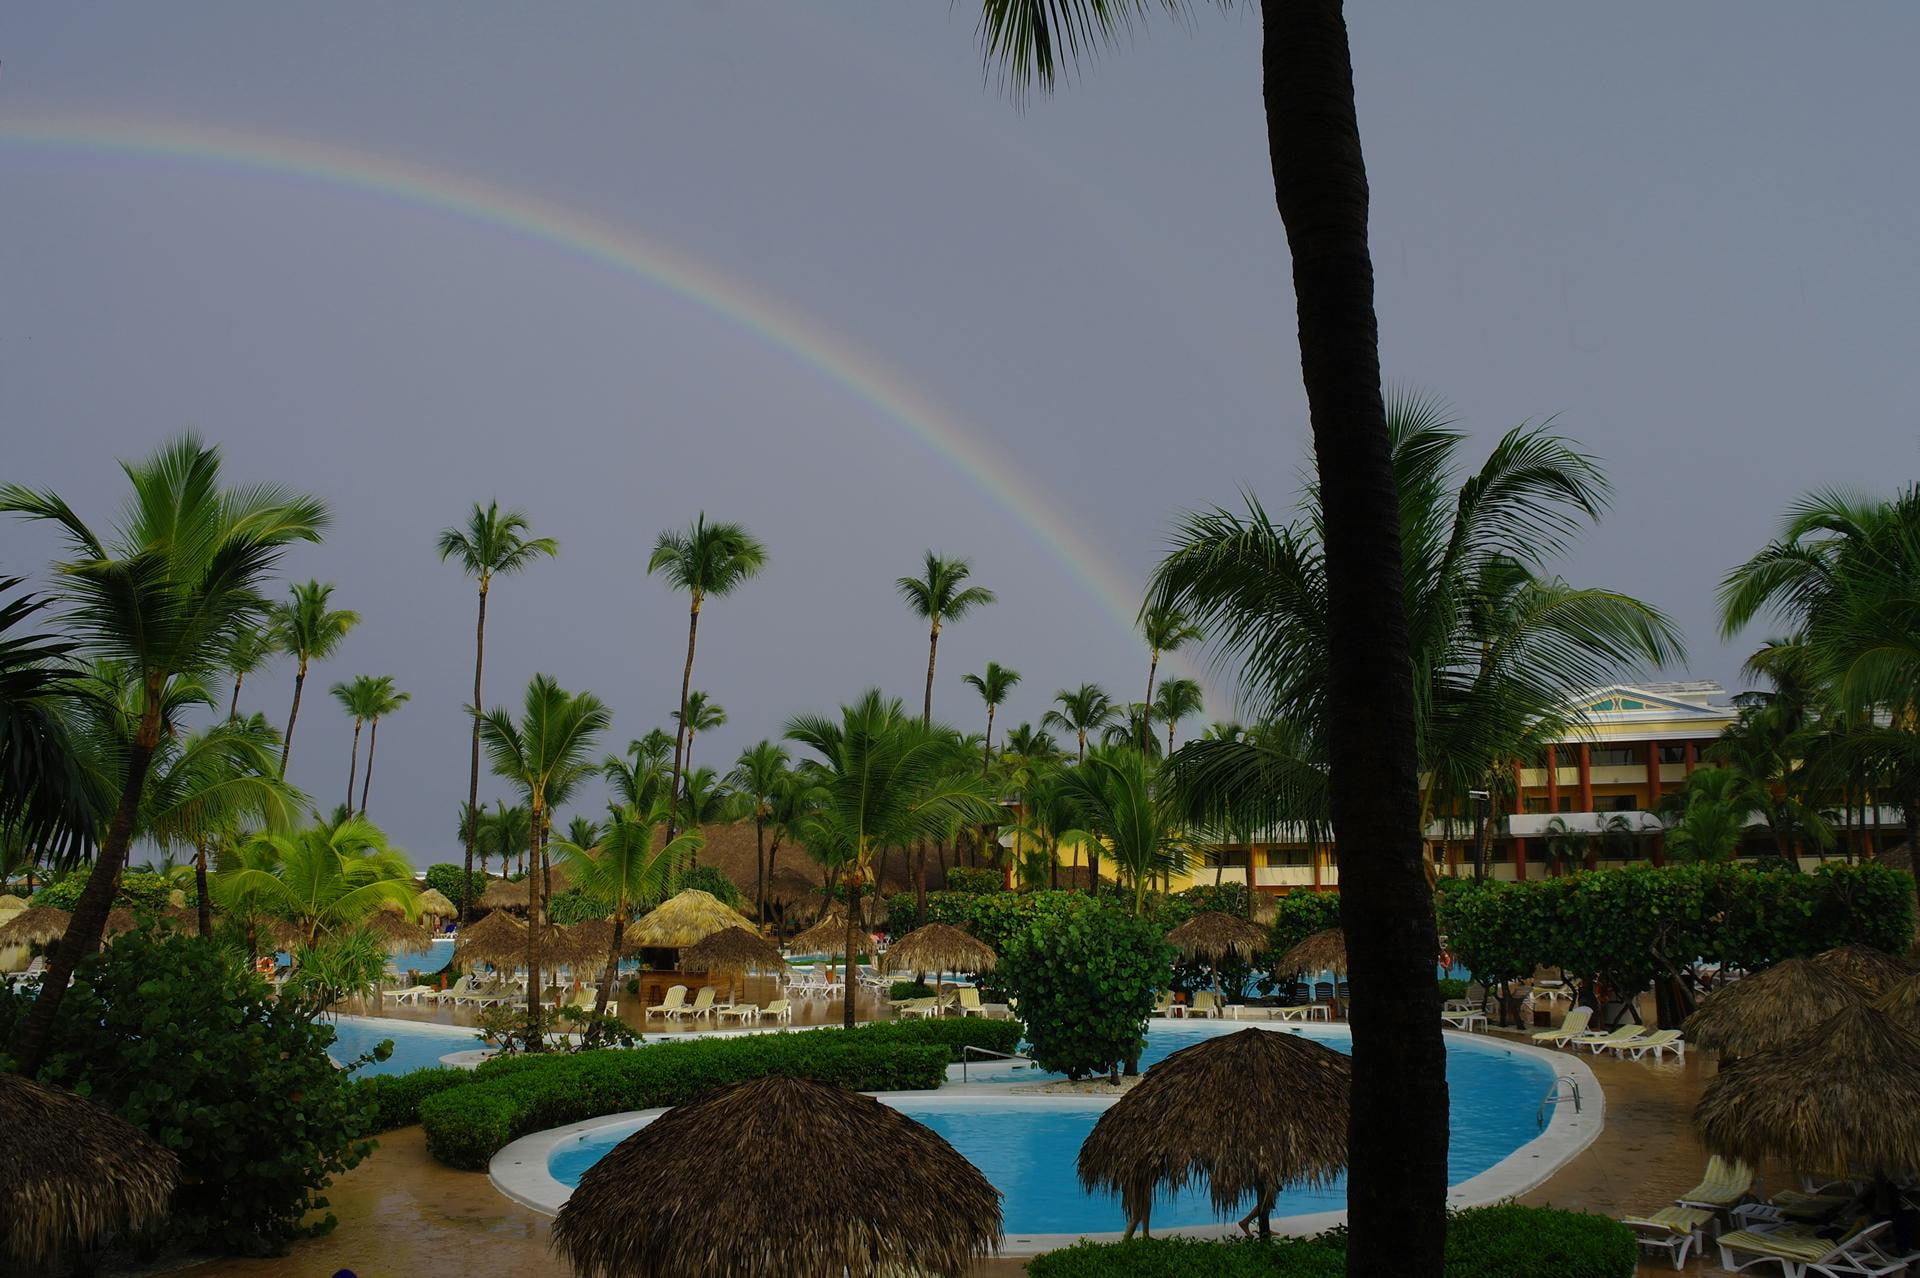 Rainbow Over Dominican Republic Resort, vacation, rainbows, travel